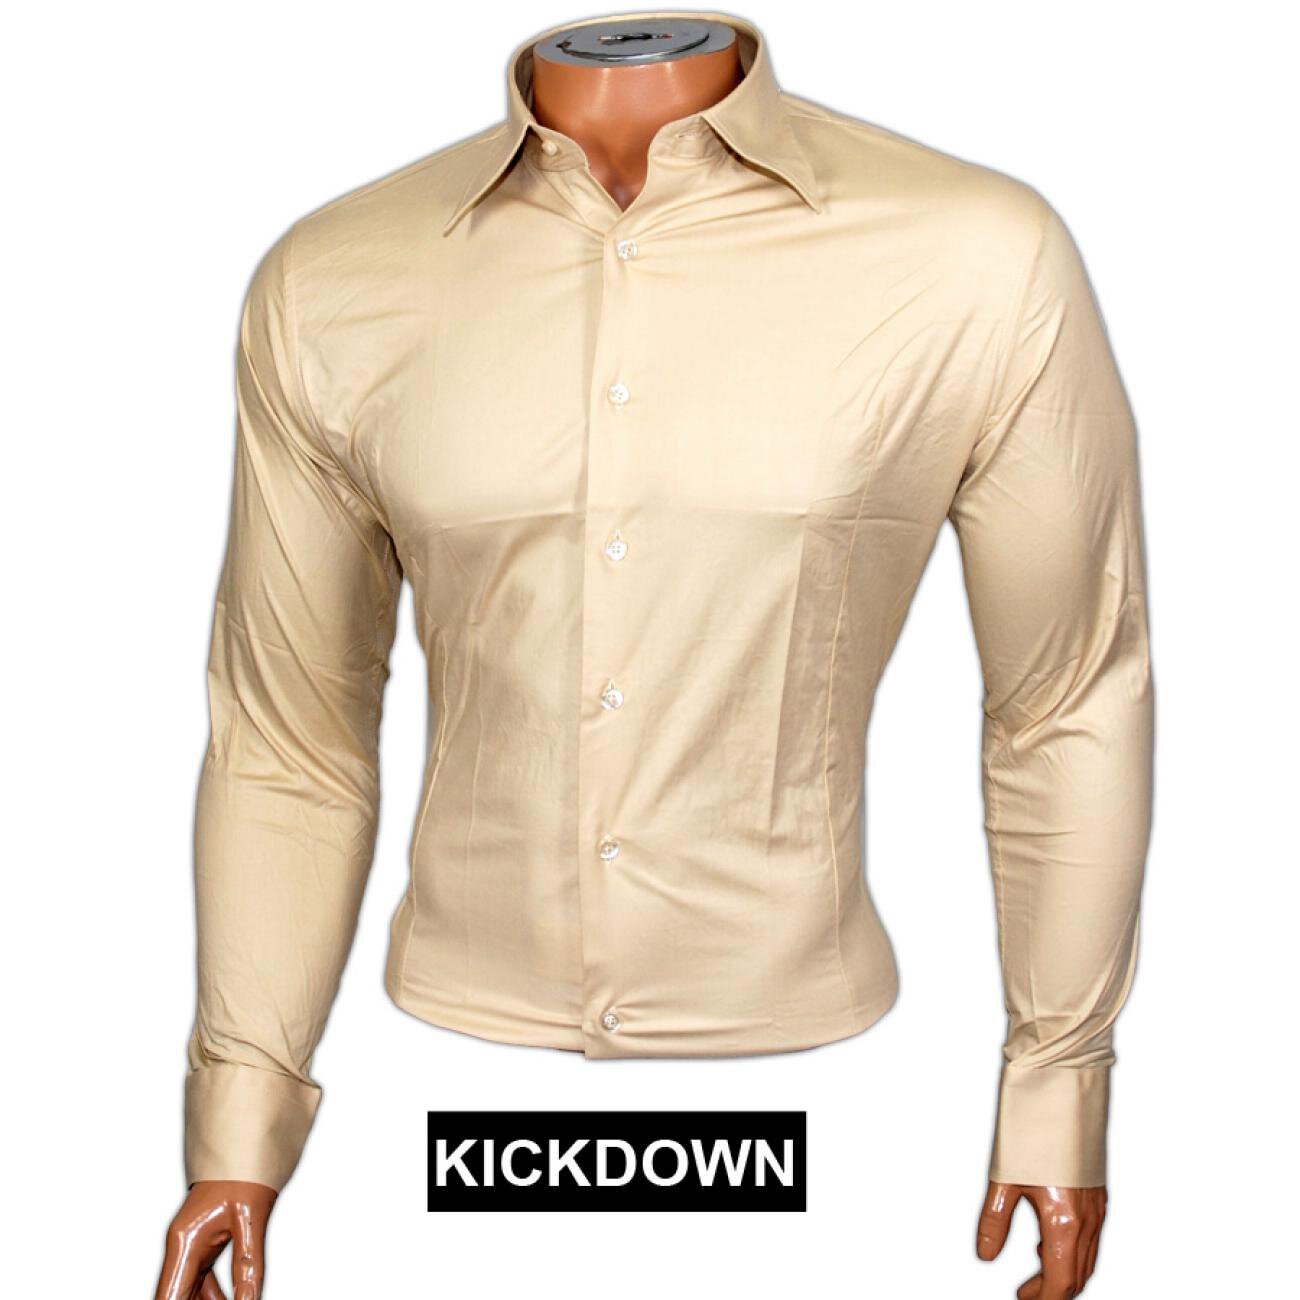 Kickdown Herren Kurzarm 2in1 V-Neck Kontrast T-Shirt Hemd Türkis KDWN-2319 